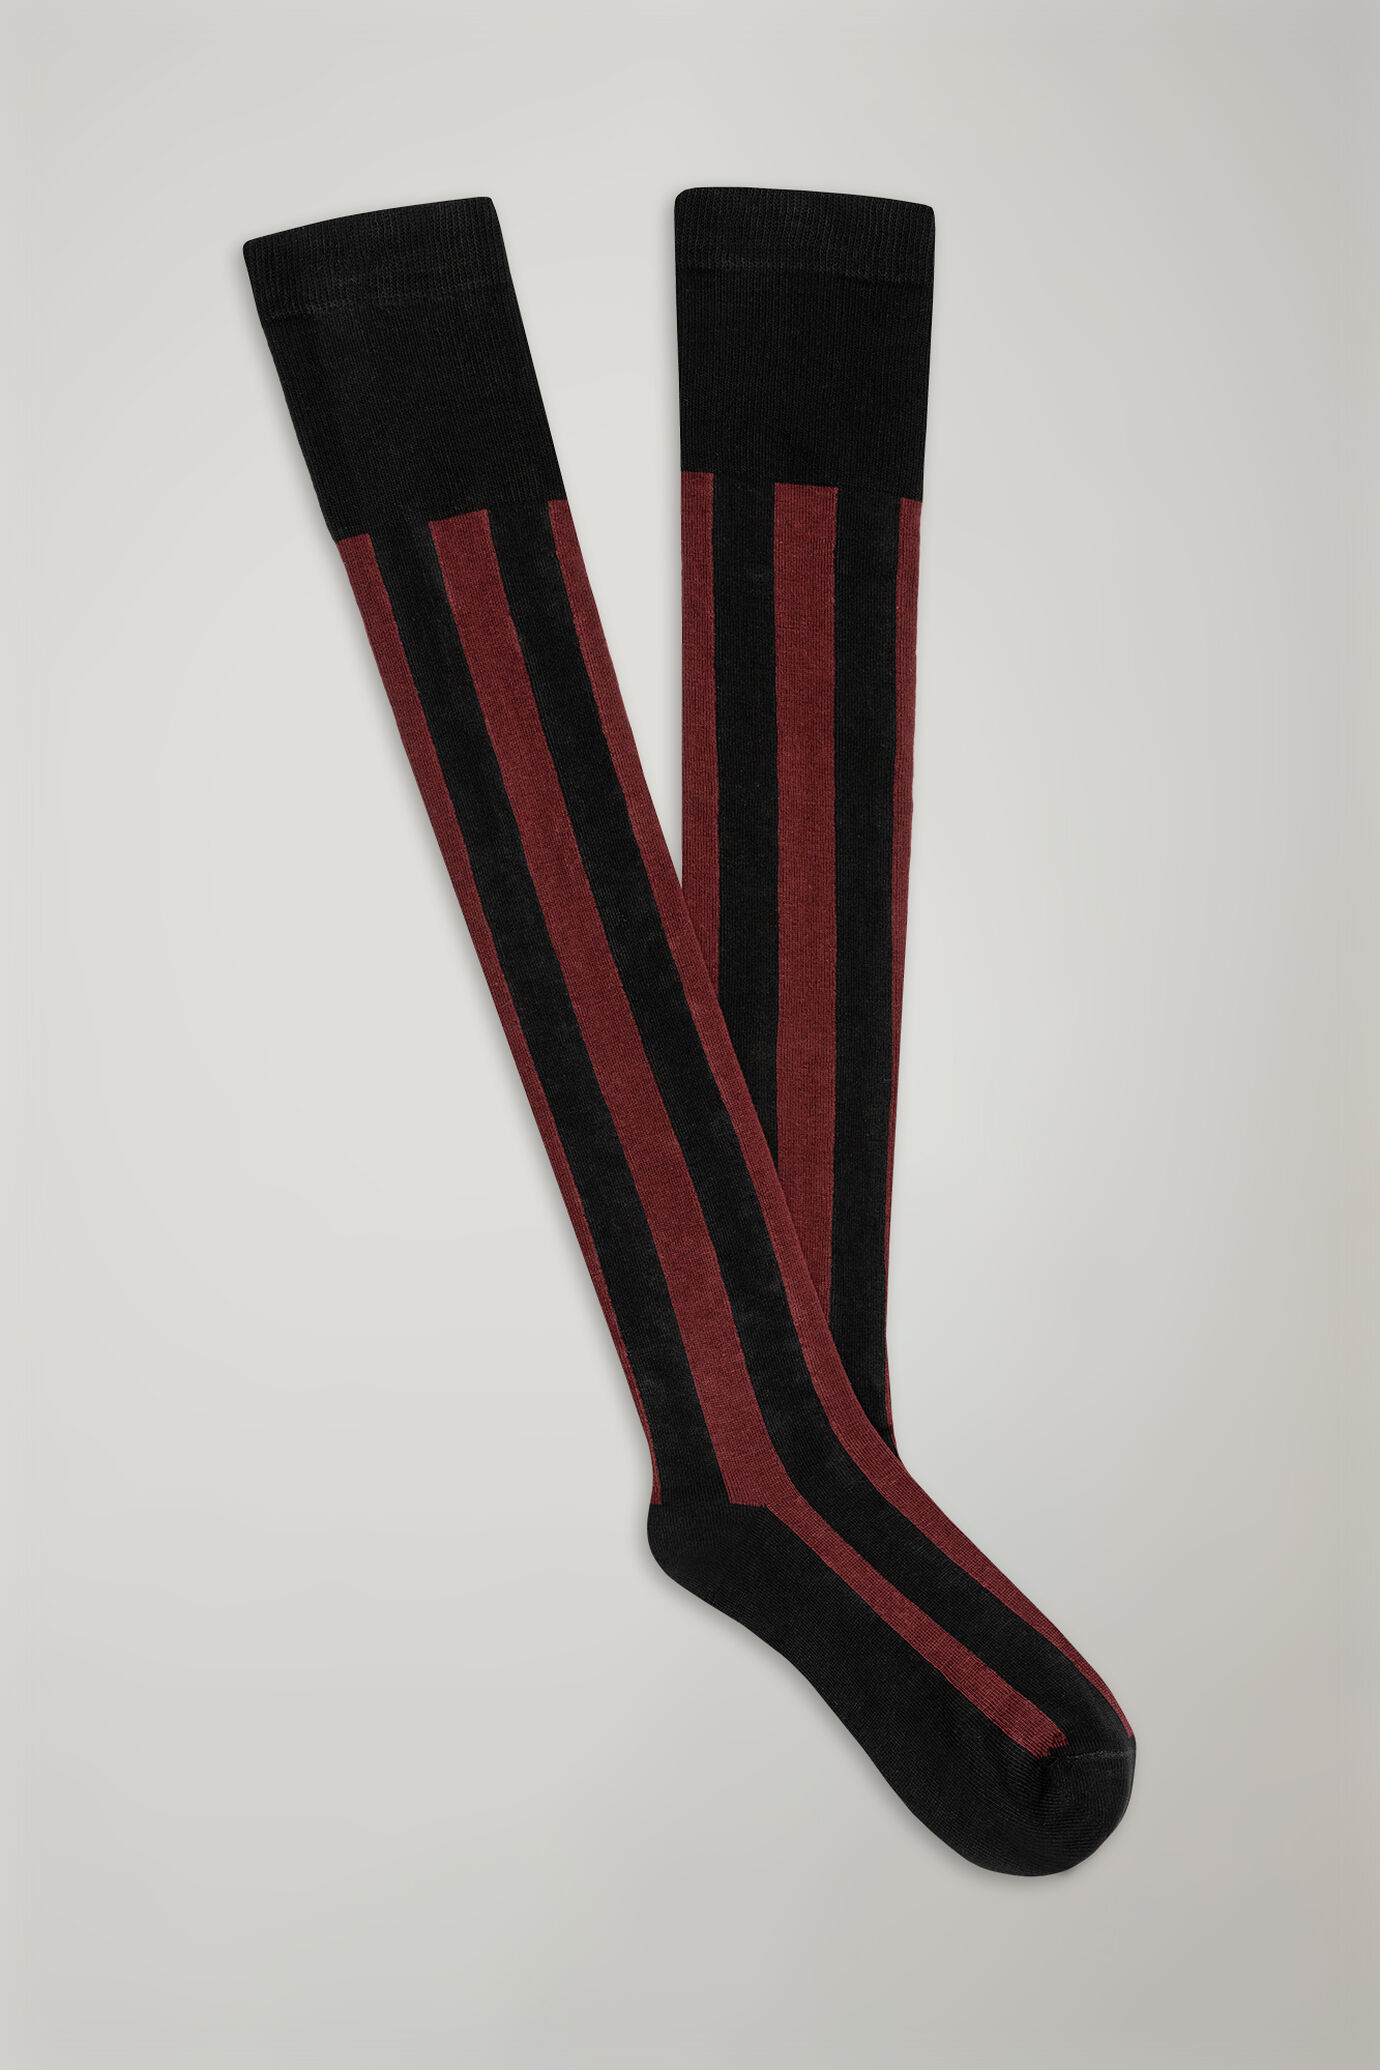 Women's cotton blendend parisian socks bicolour vertica stripped knitting made in italy